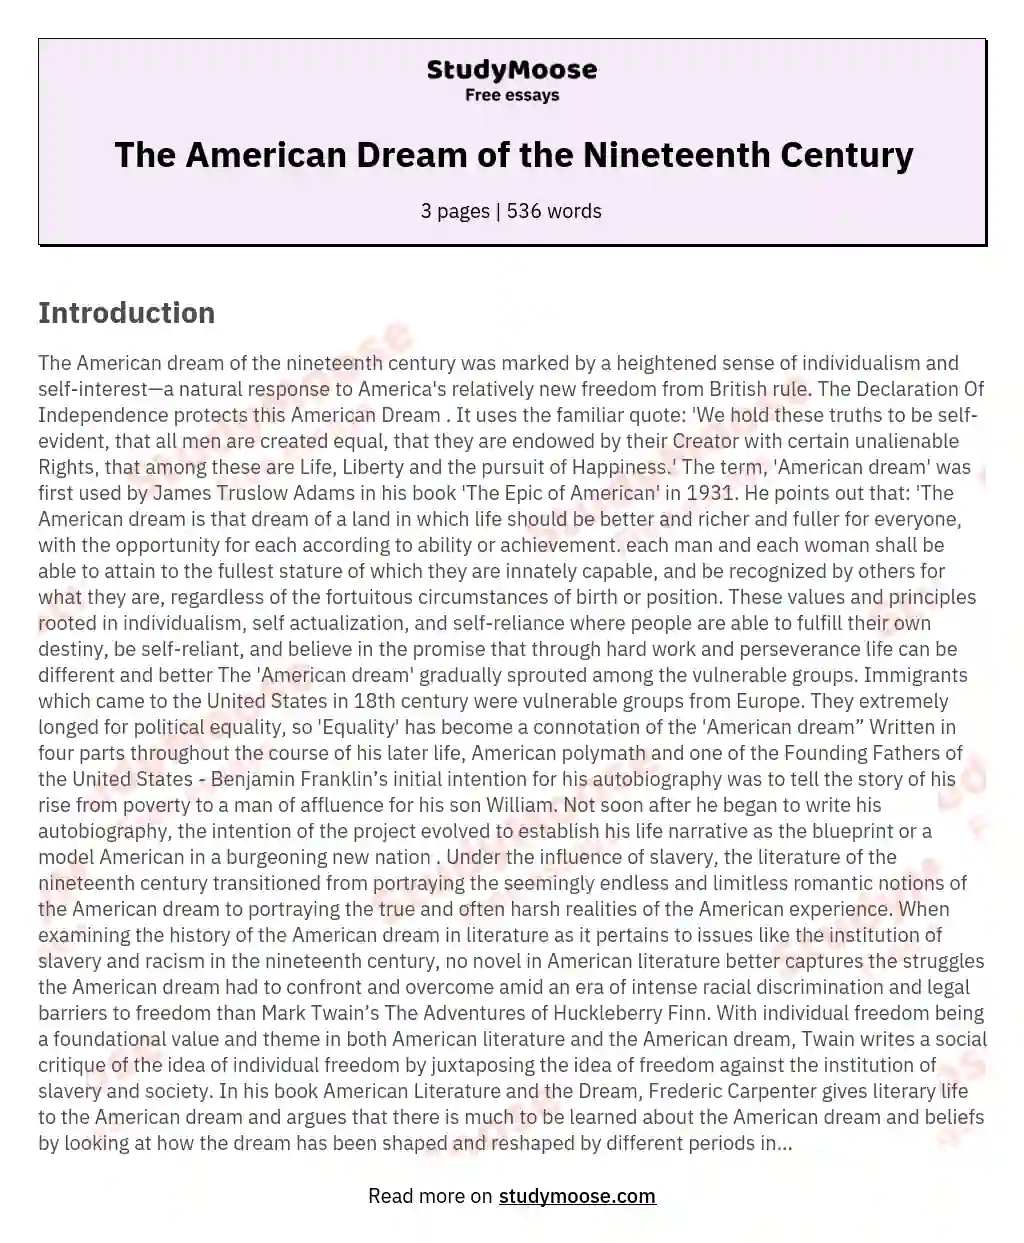 The American Dream of the Nineteenth Century essay